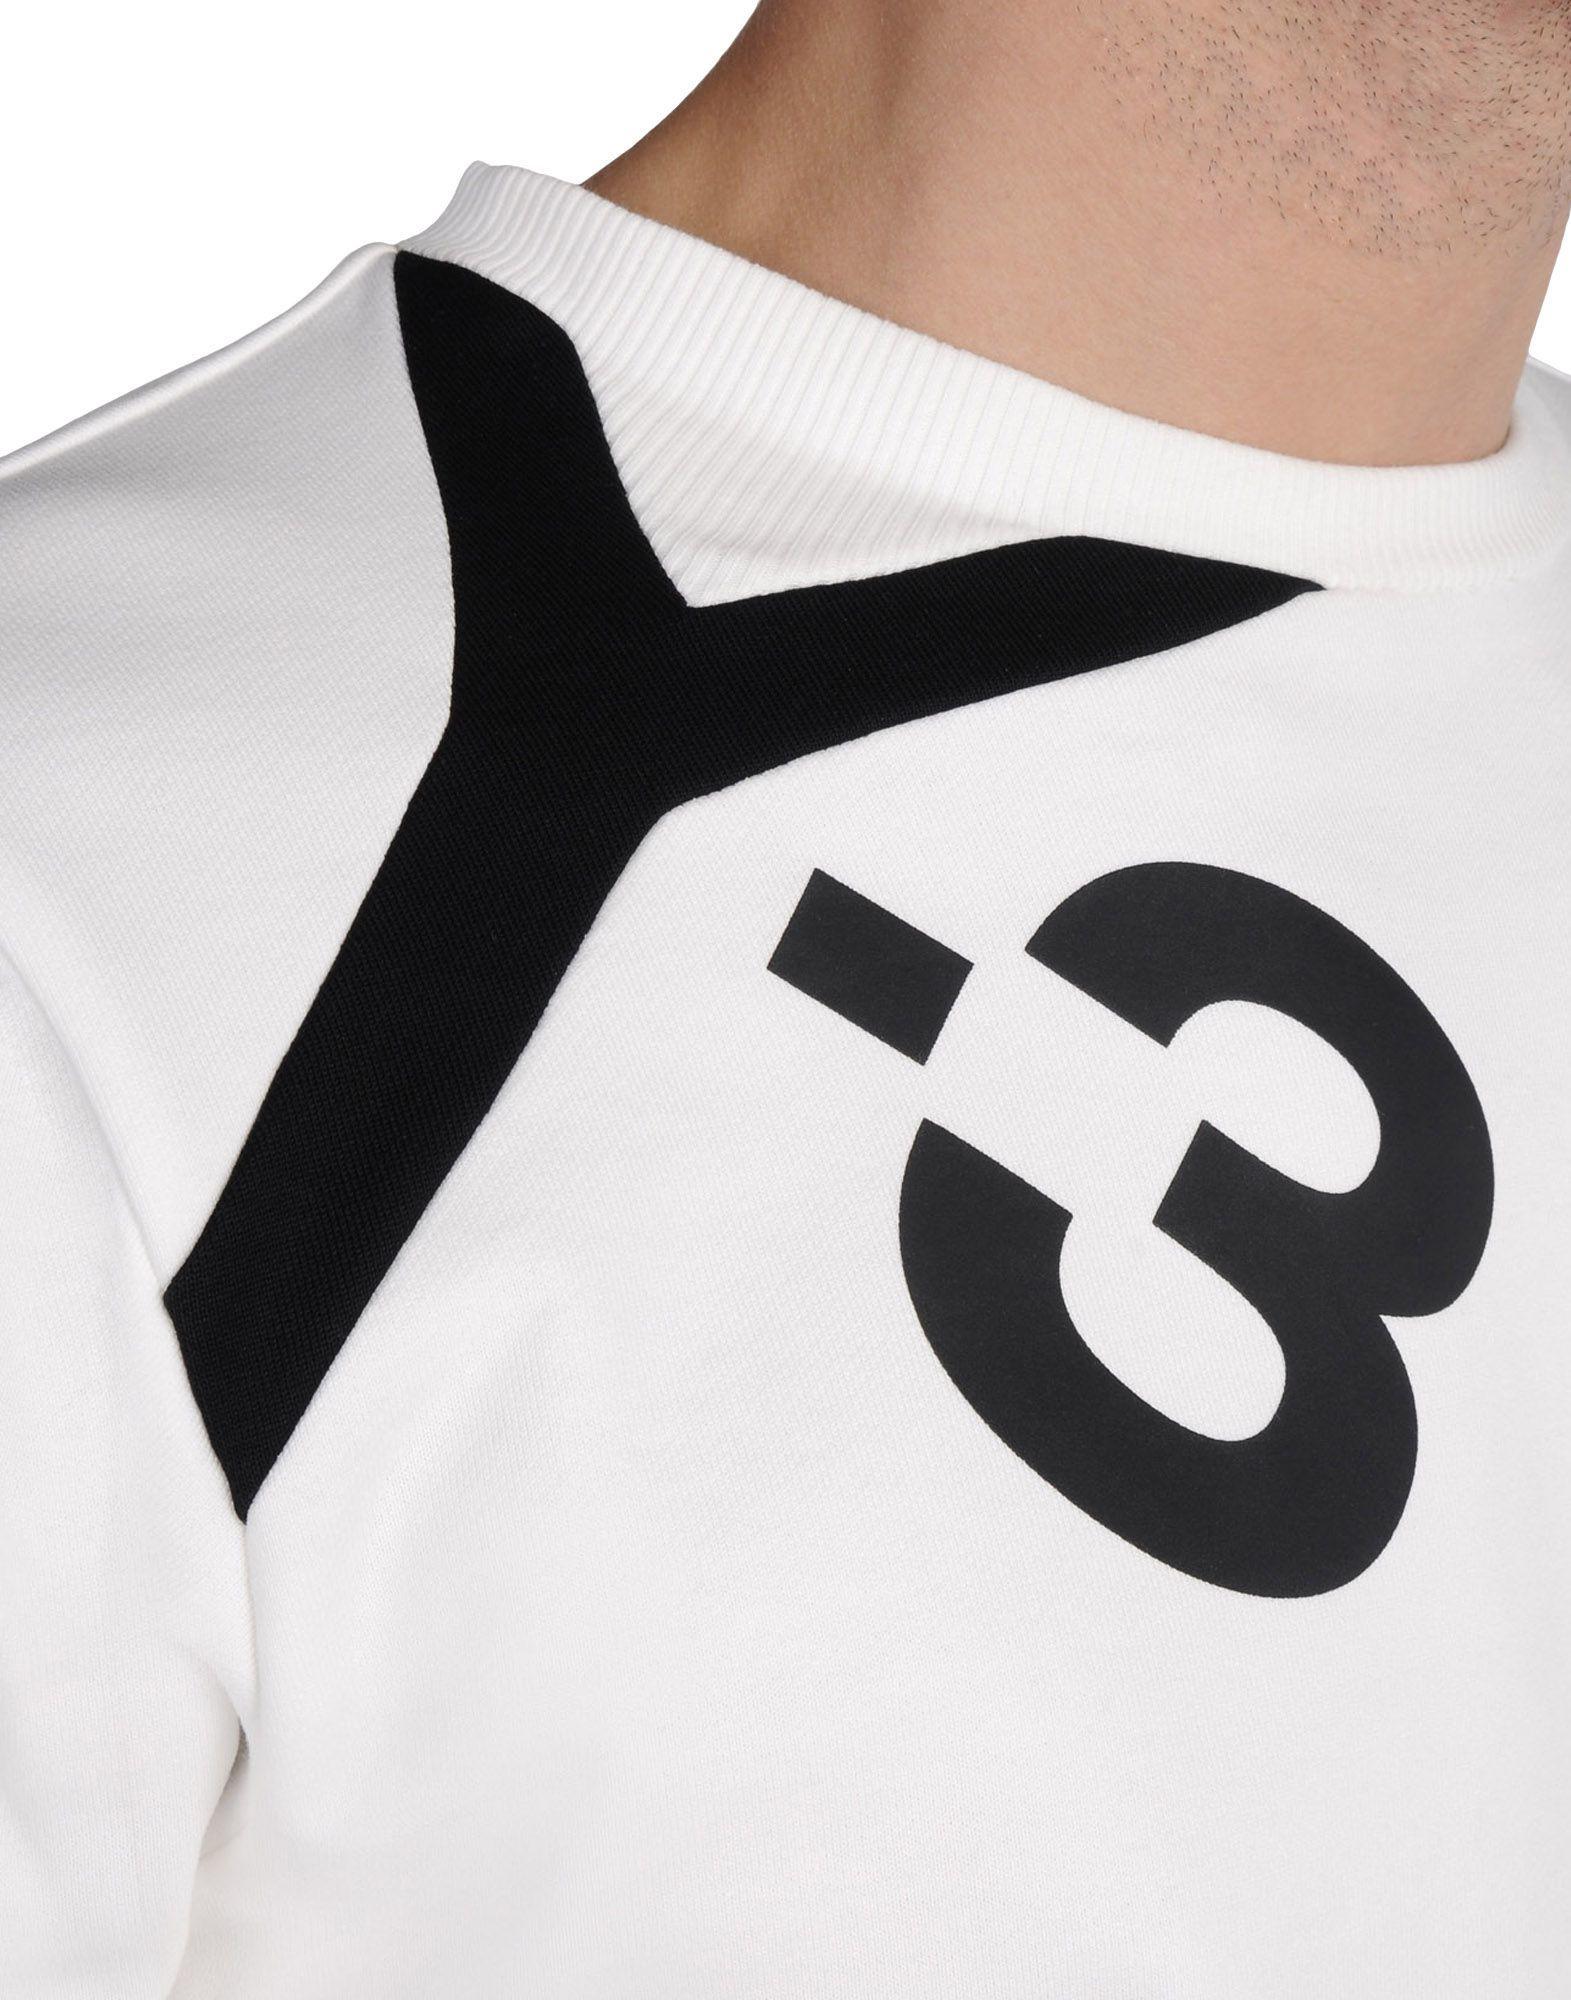 Y-3 Logo - Y-3 Logo Sweater in White for Men - Lyst